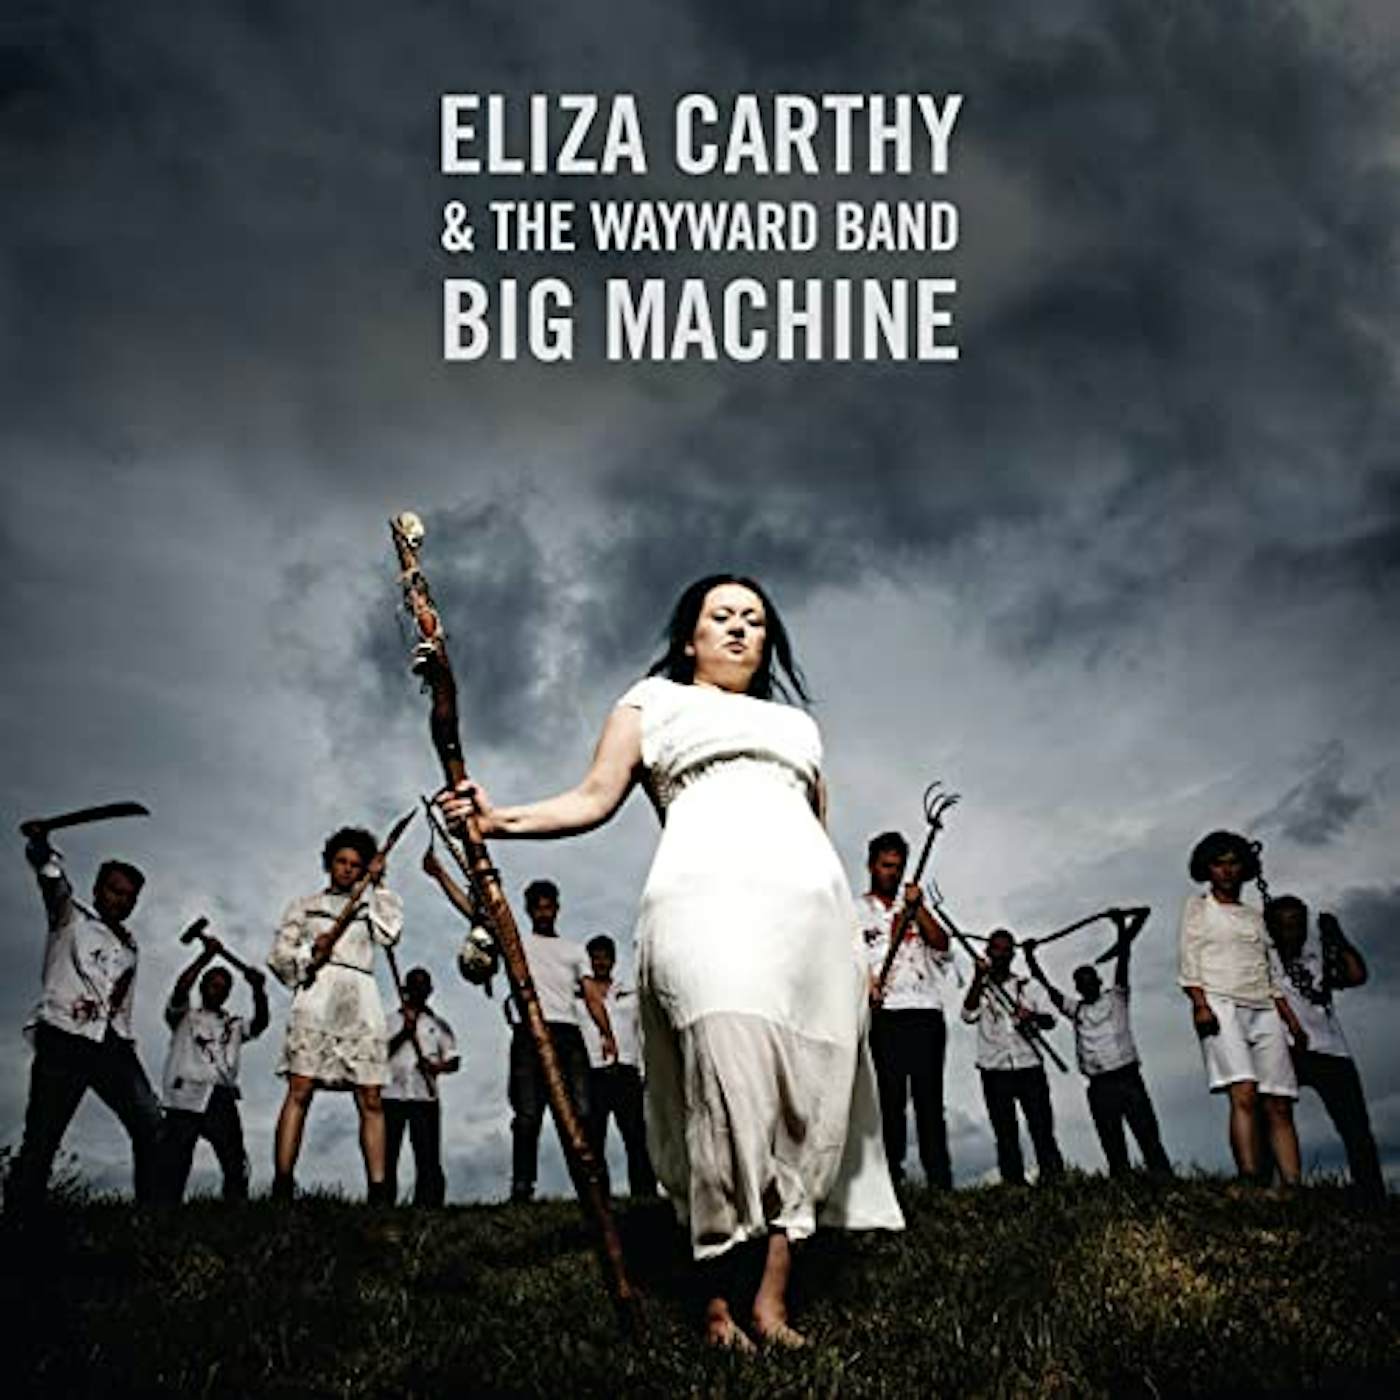 Eliza Carthy & The Wayward Band Big Machine Vinyl Record